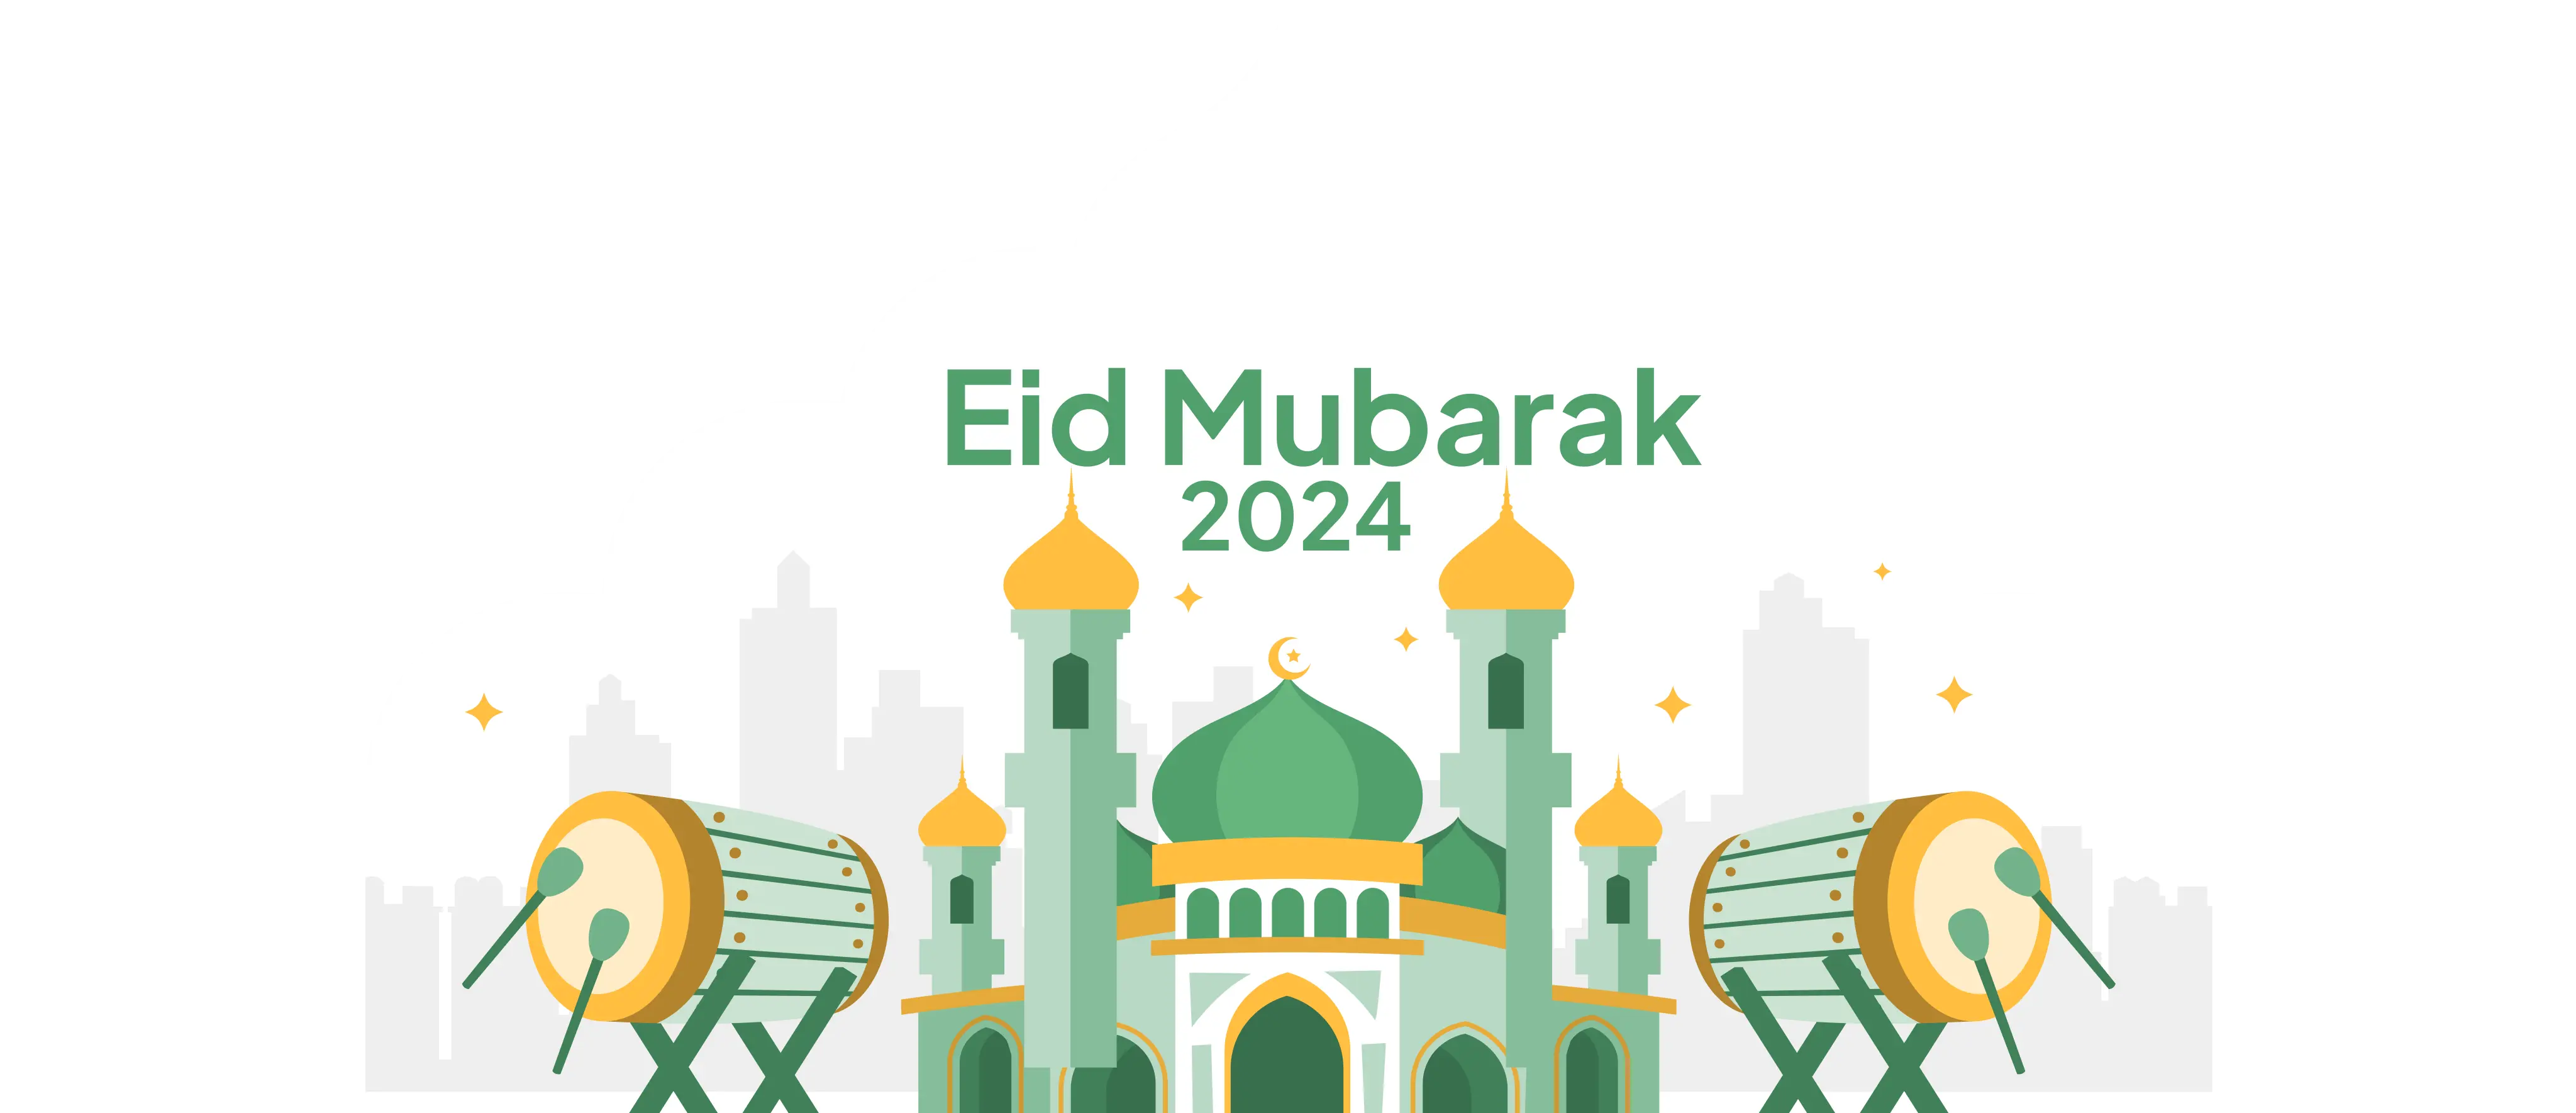 Eid Mubarak 2024 Doodle